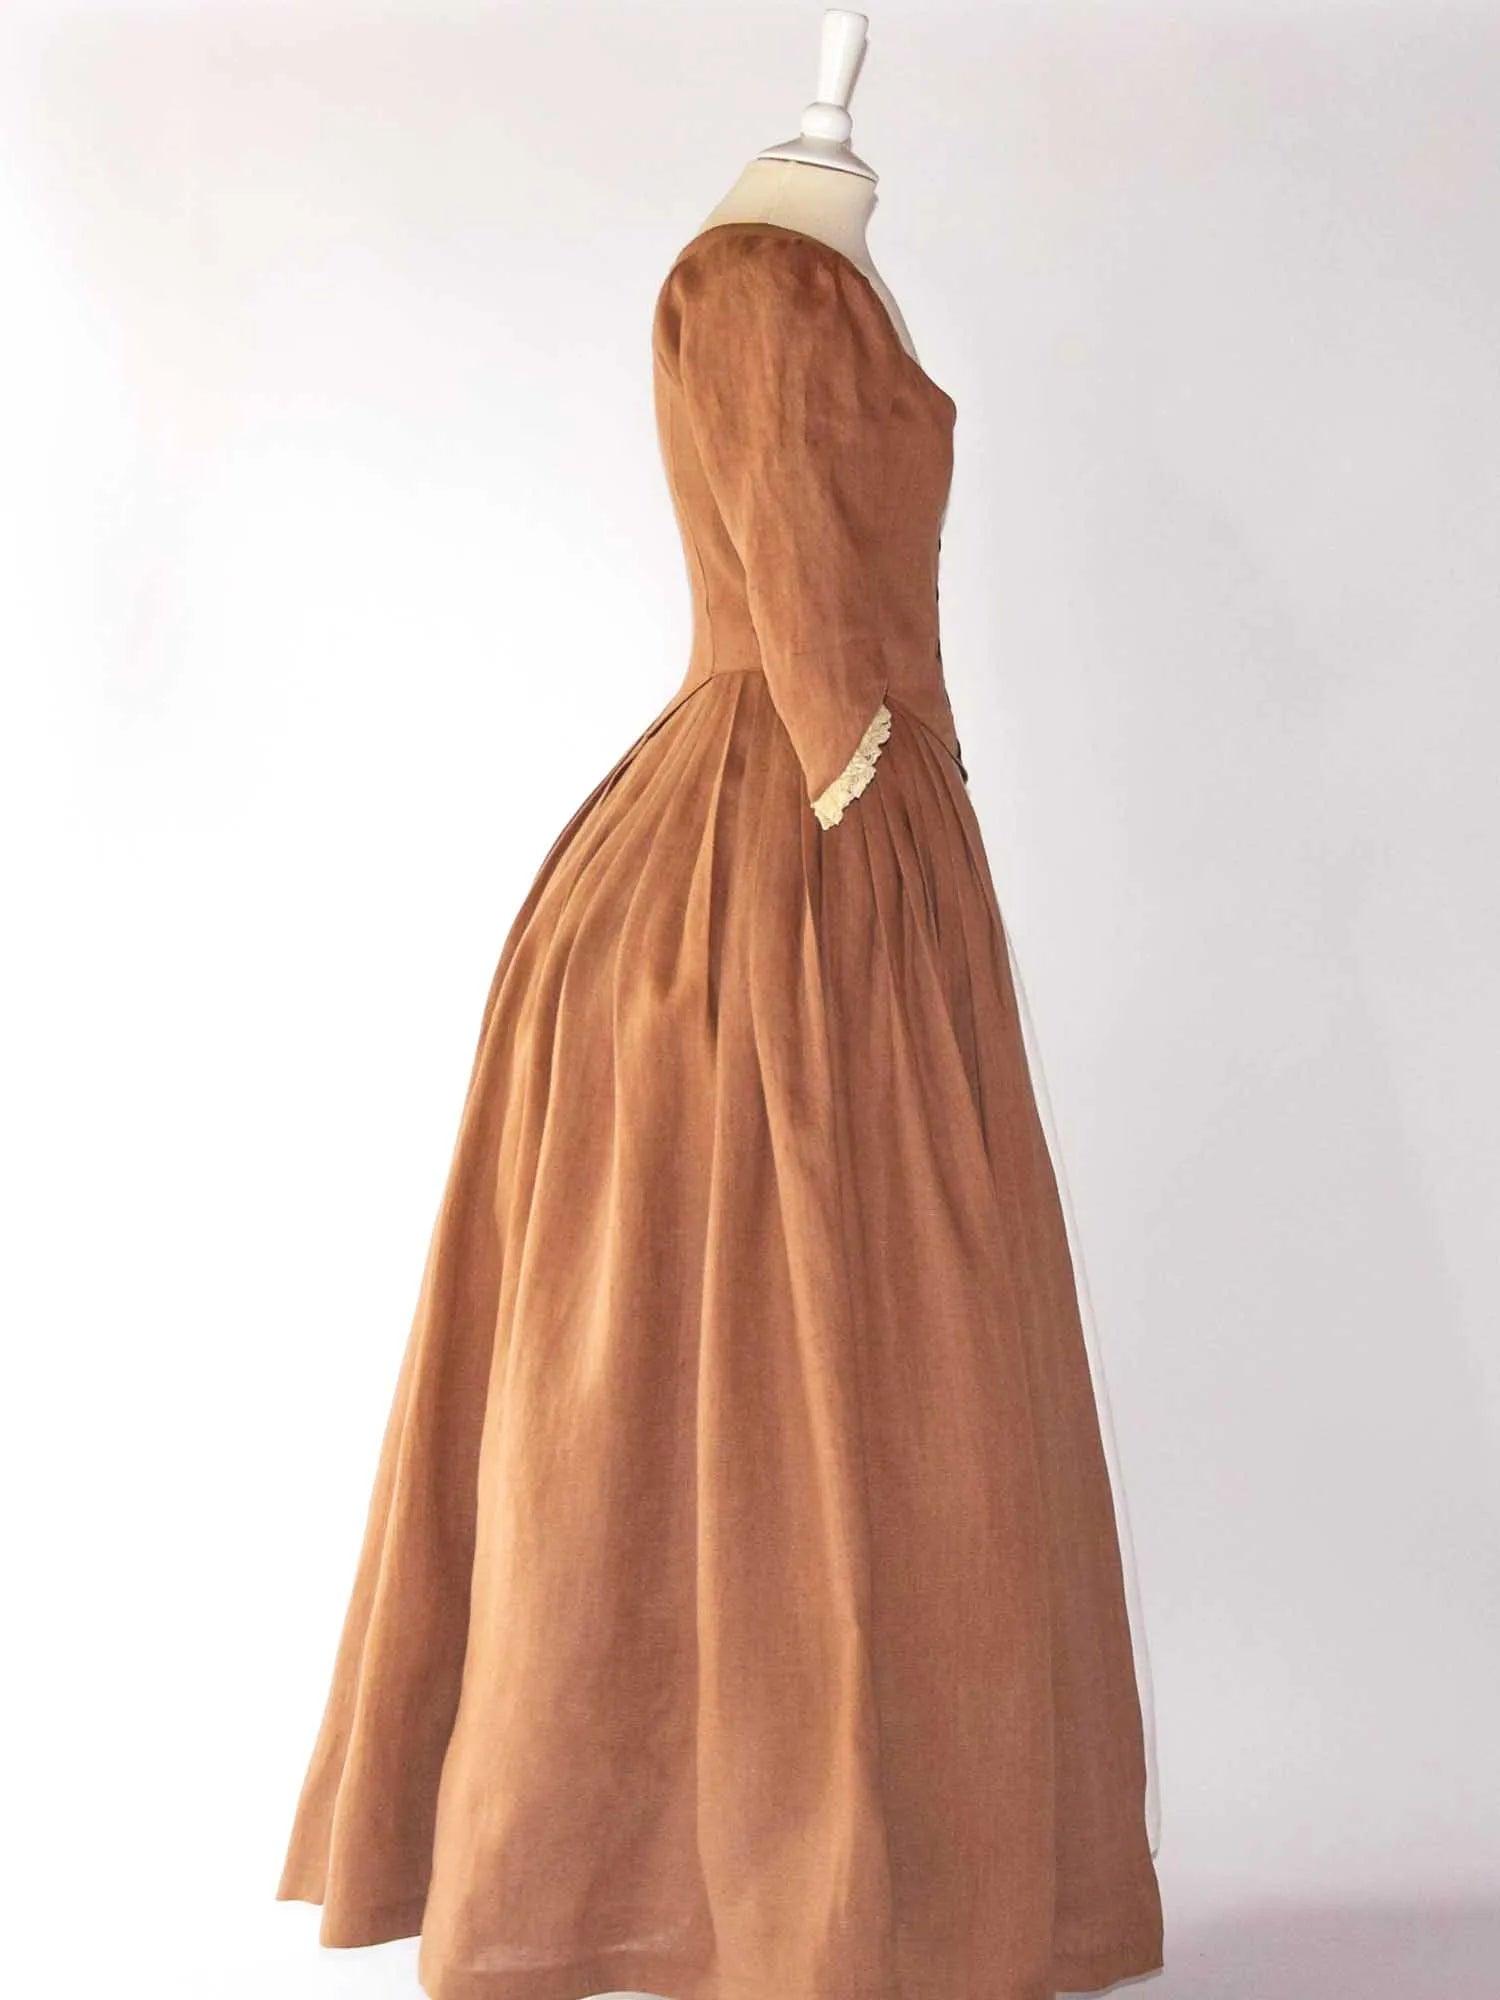 18th Century Overdress in Toffee Linen &amp; Skirt - Atelier Serraspina